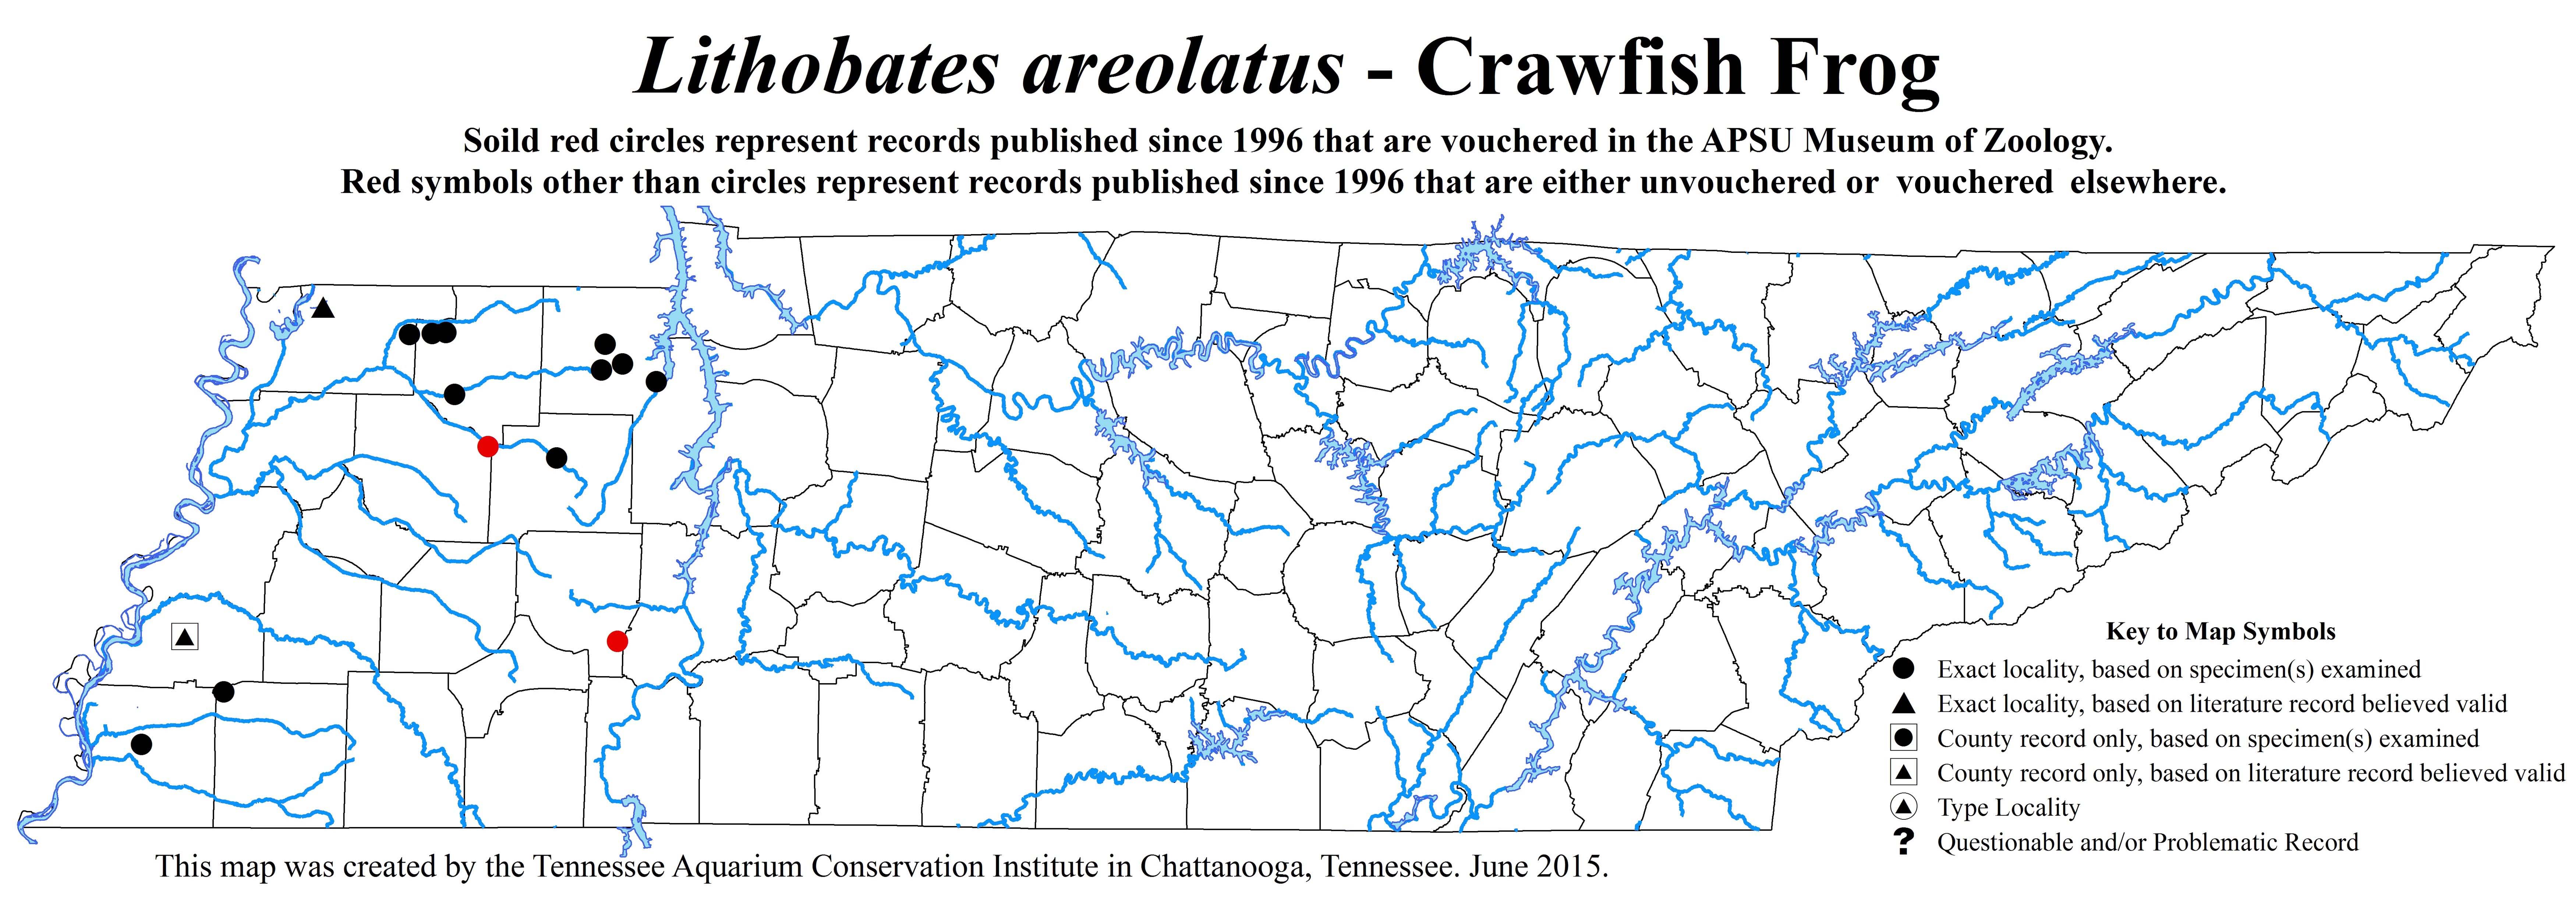 New Distribution Map - Lithobates areolatus (Baird and Girard) - Crawfish Frog